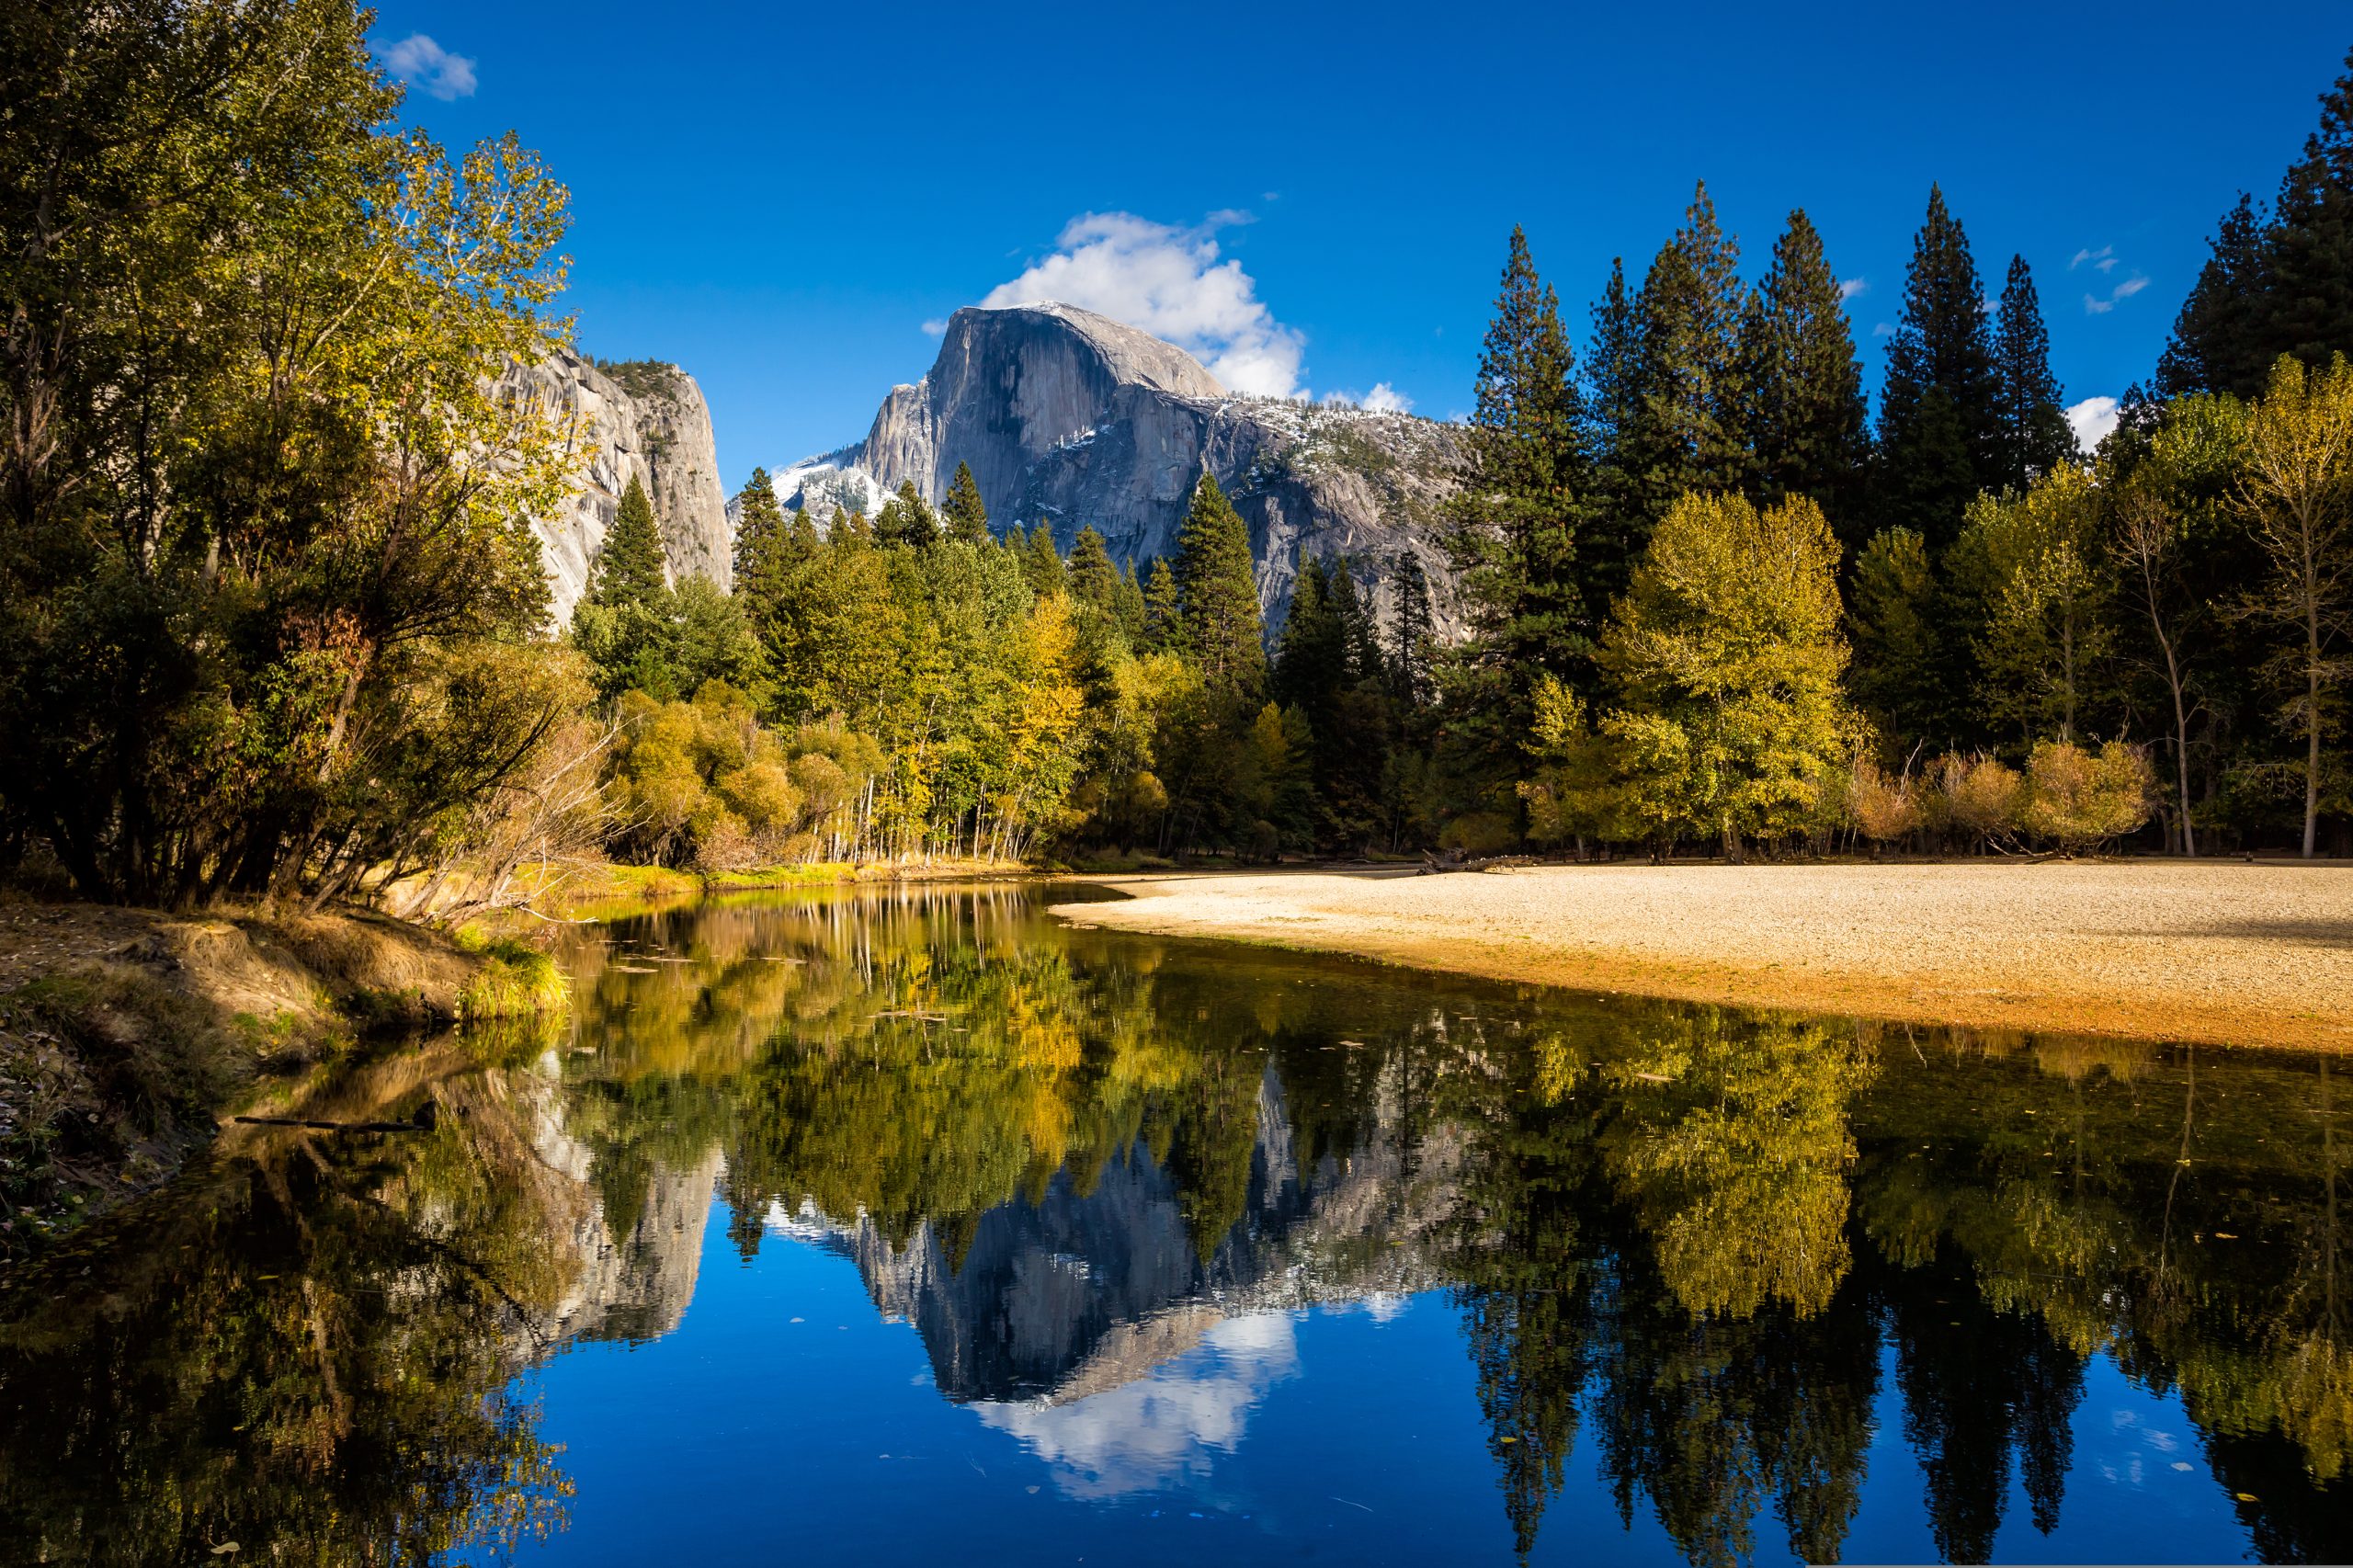 Half,Dome,Mountain,In,Yosemite,National,Park,In,California